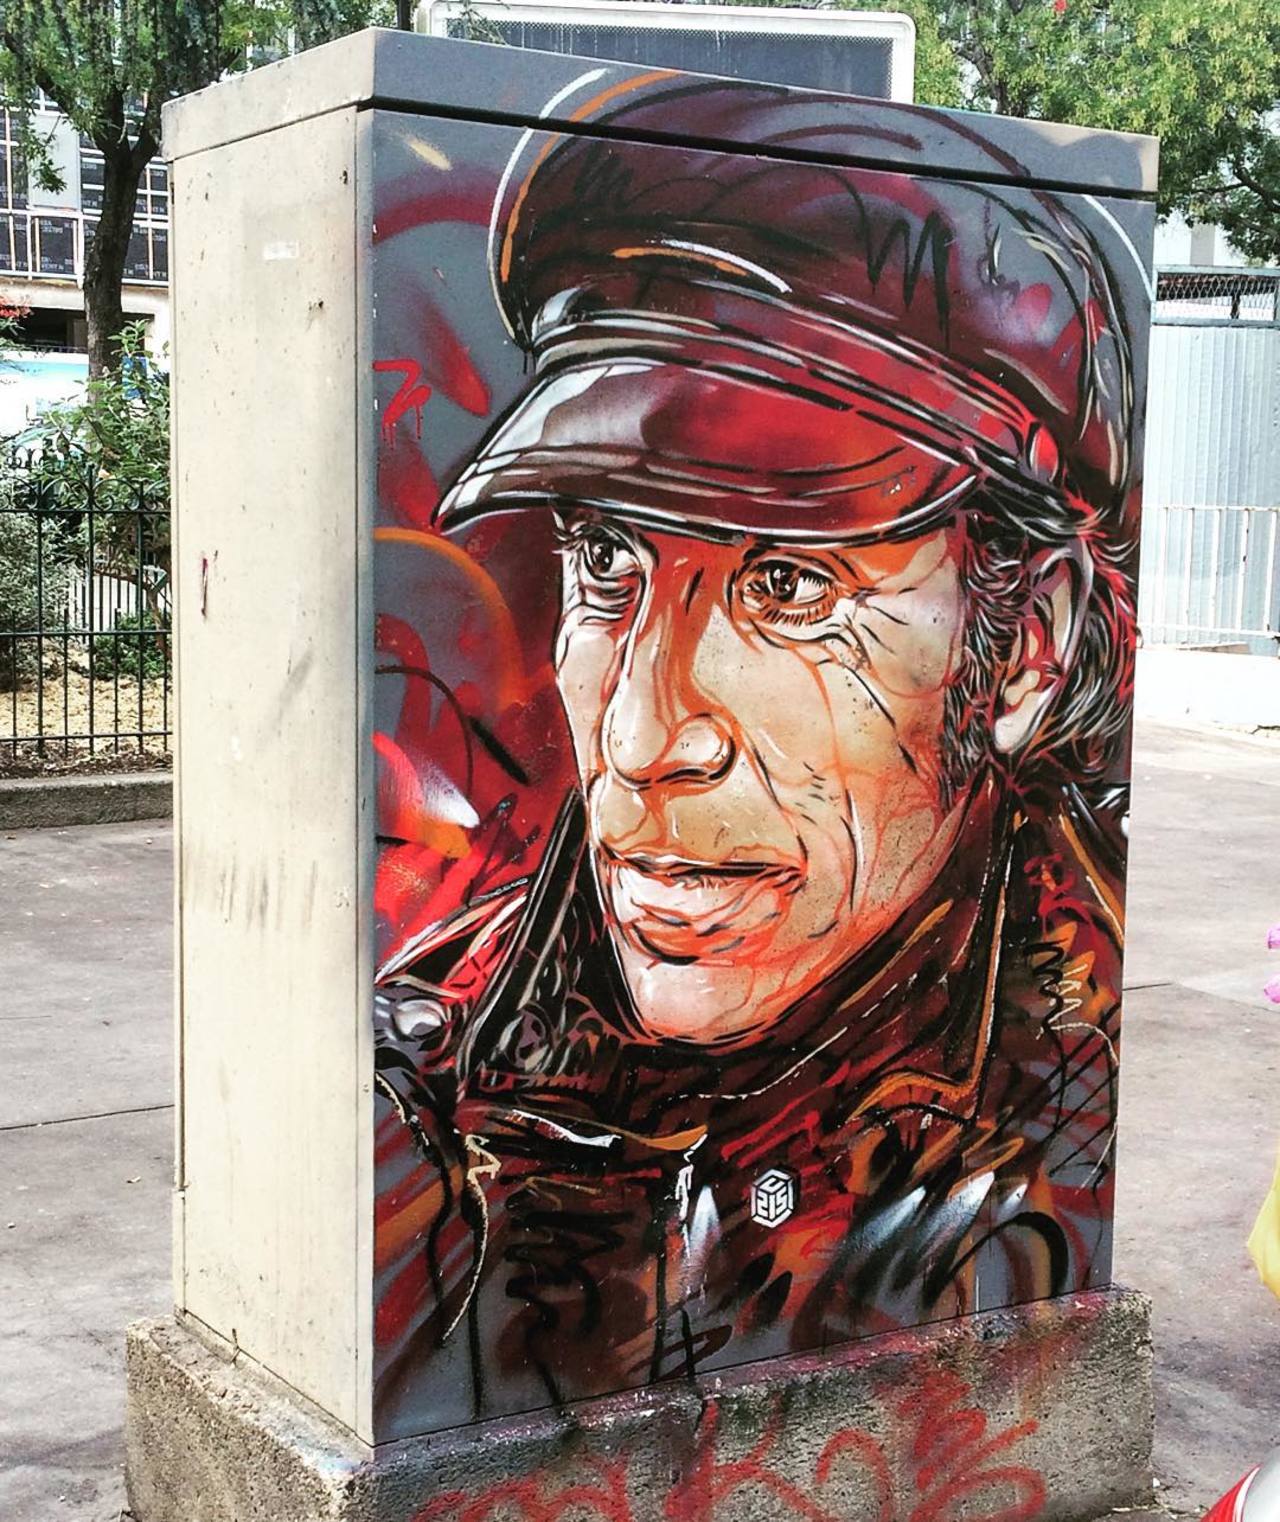 #Paris #graffiti photo by @julosteart http://ift.tt/1N2KkWv #StreetArt https://t.co/cEp25L0J22